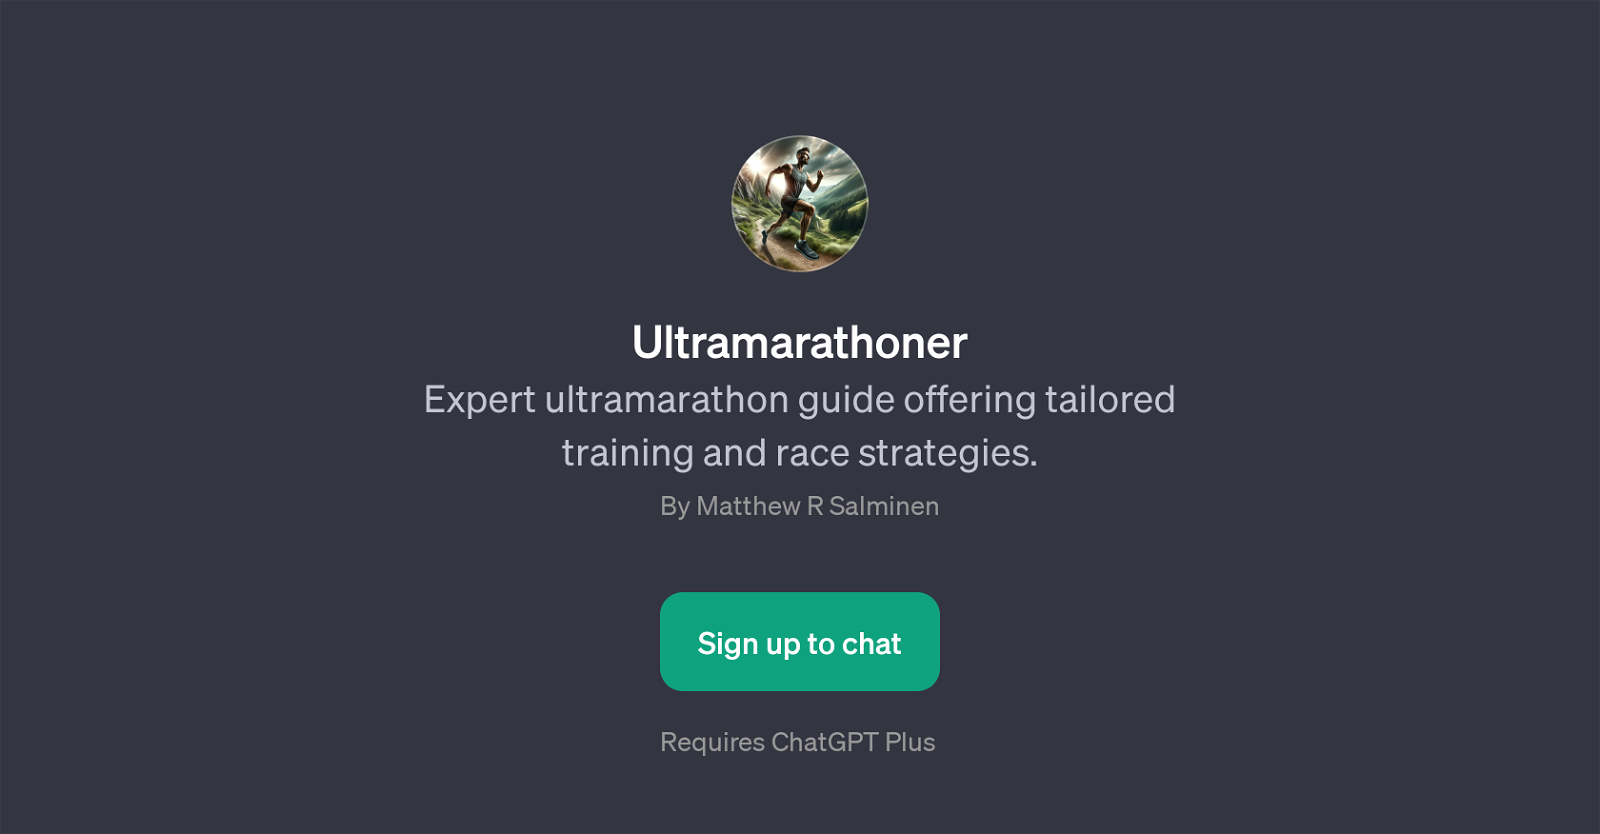 Ultramarathoner website